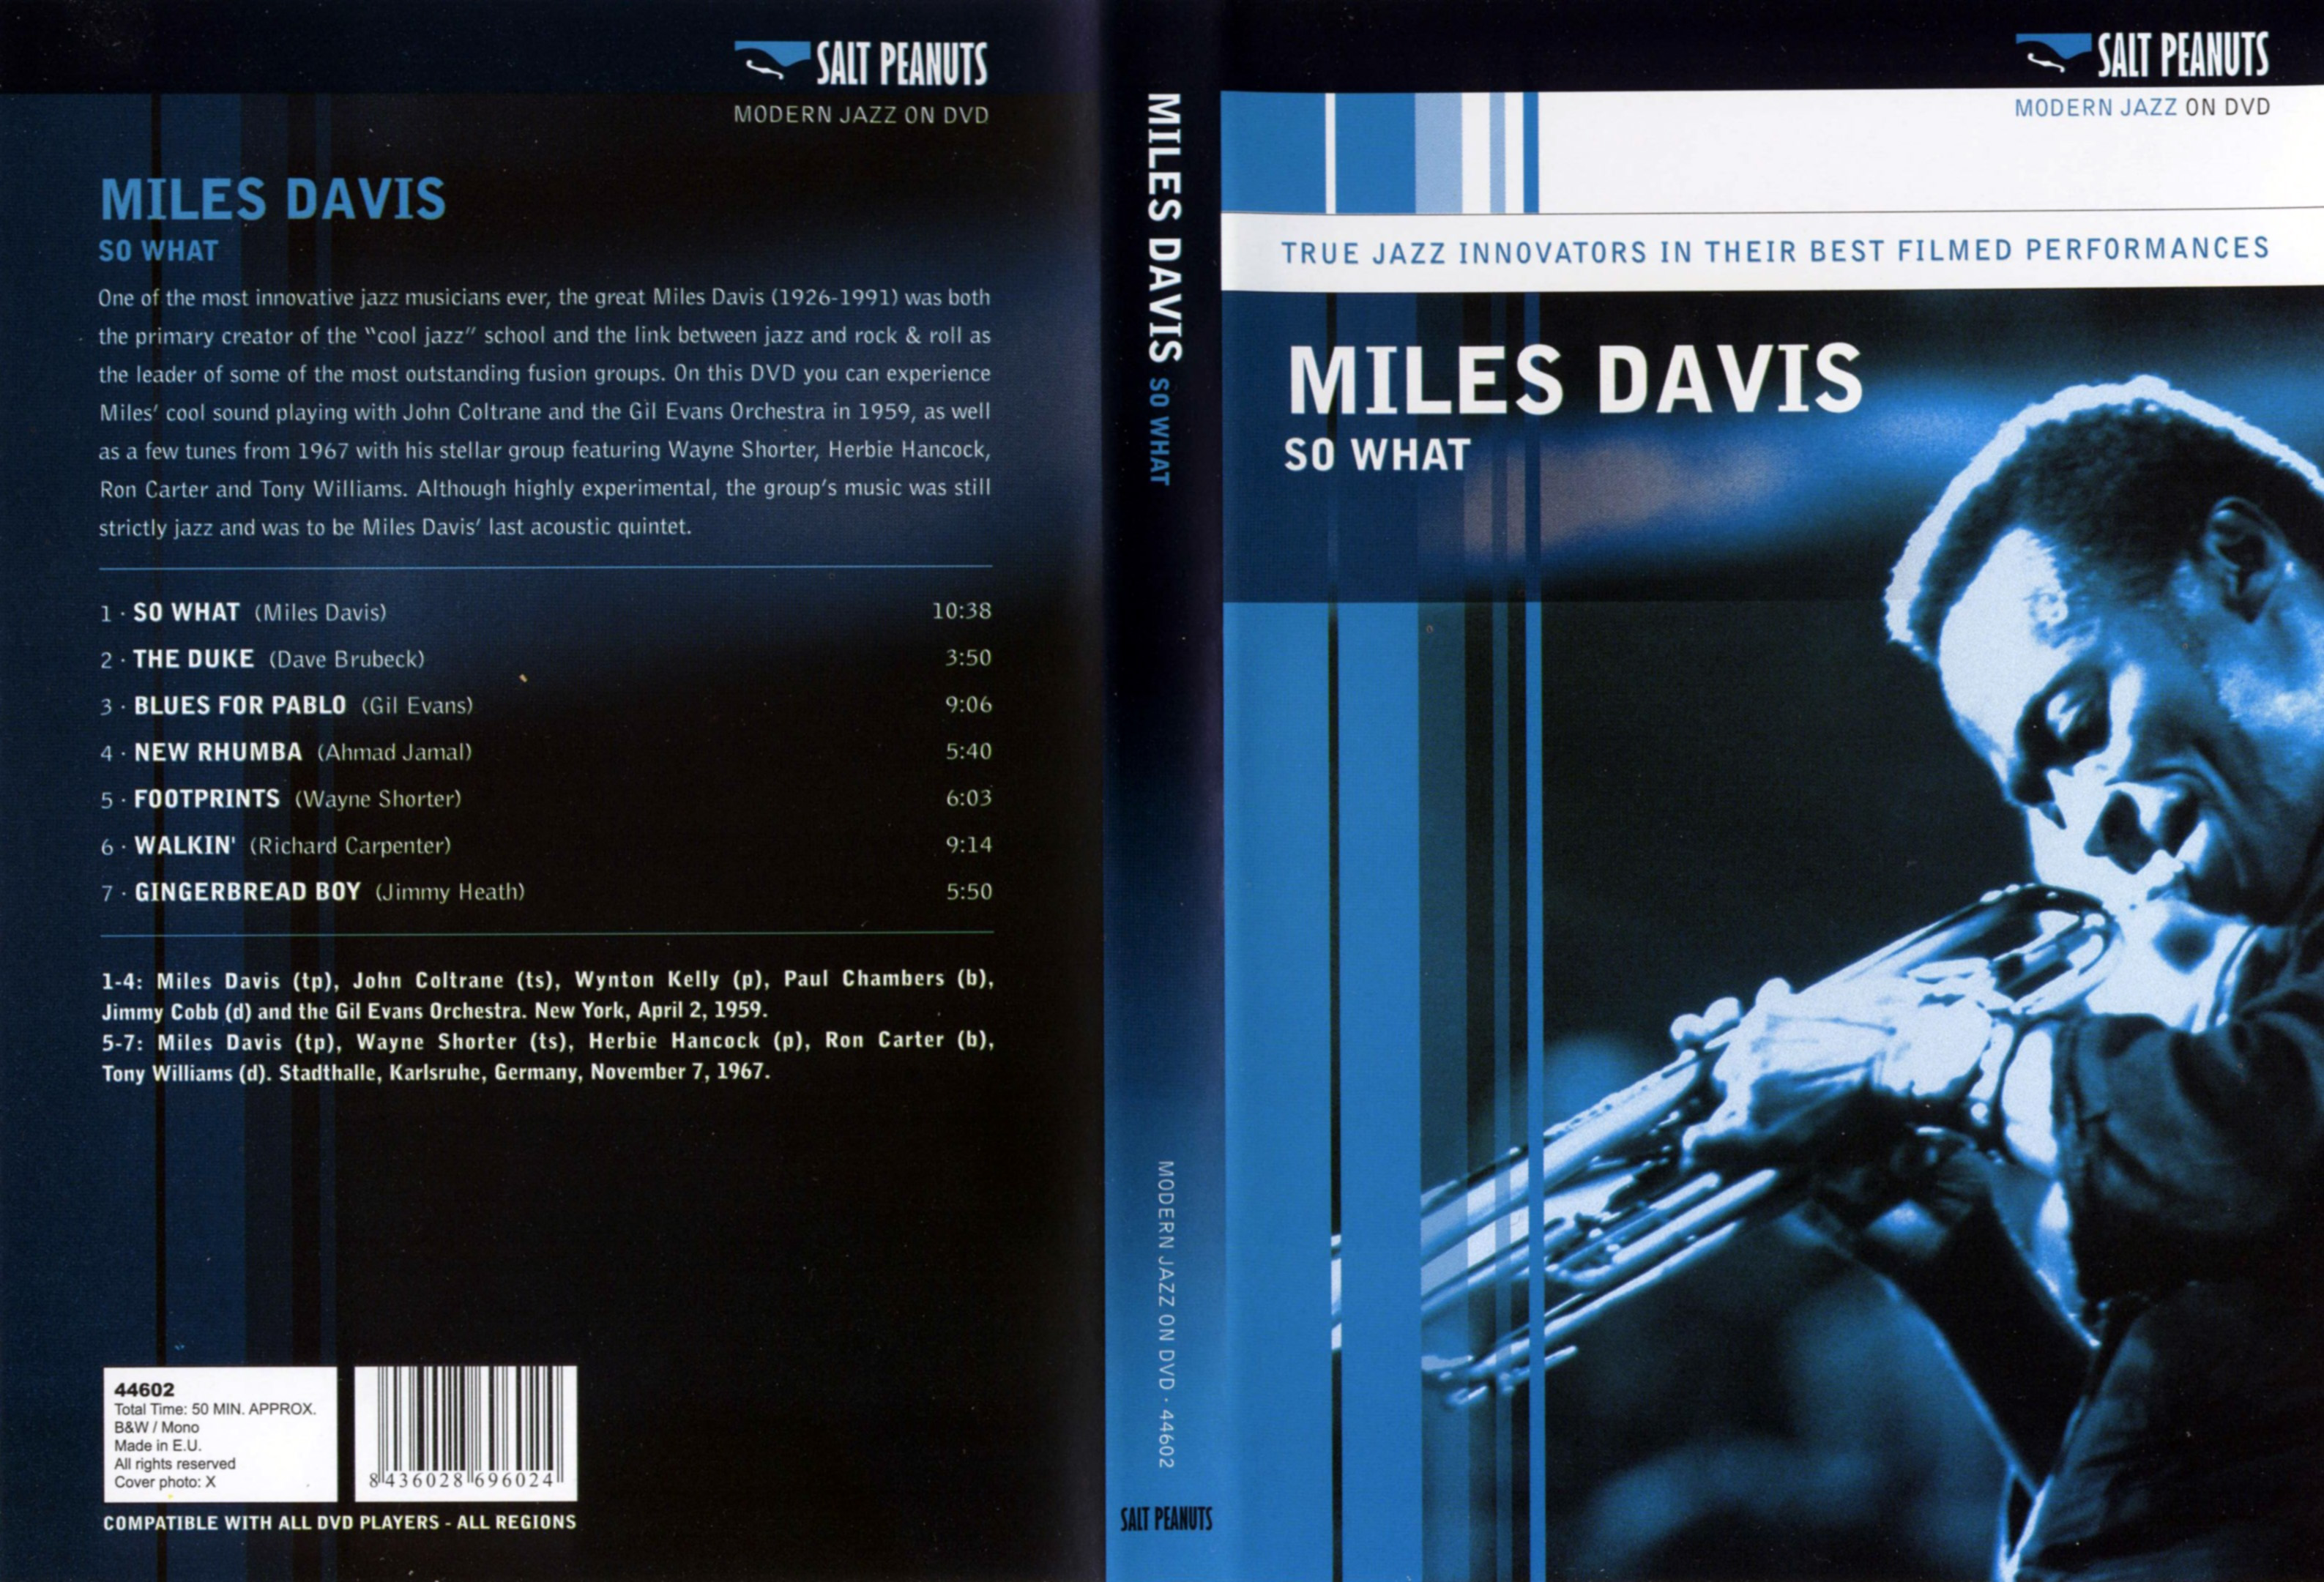 Jaquette DVD Miles Davis so what